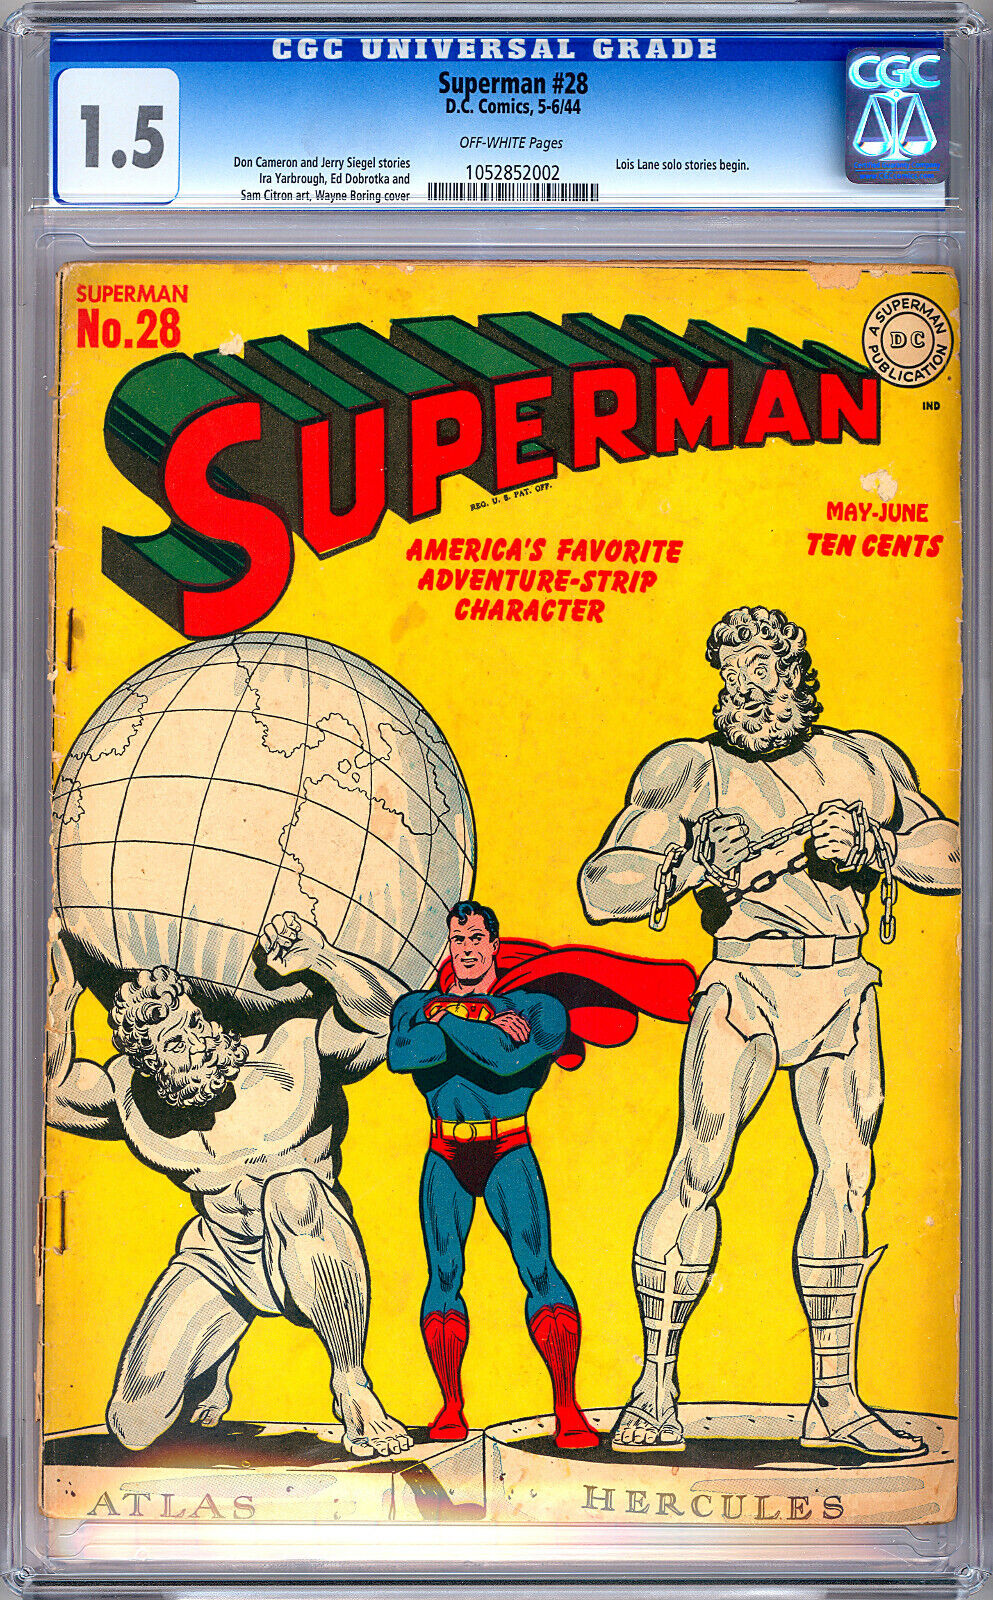 SUPERMAN #28 CGC 1.5 JERRY SIEGEL STORY WAYNE BORING COVER WWII GA CLASSIC 1944